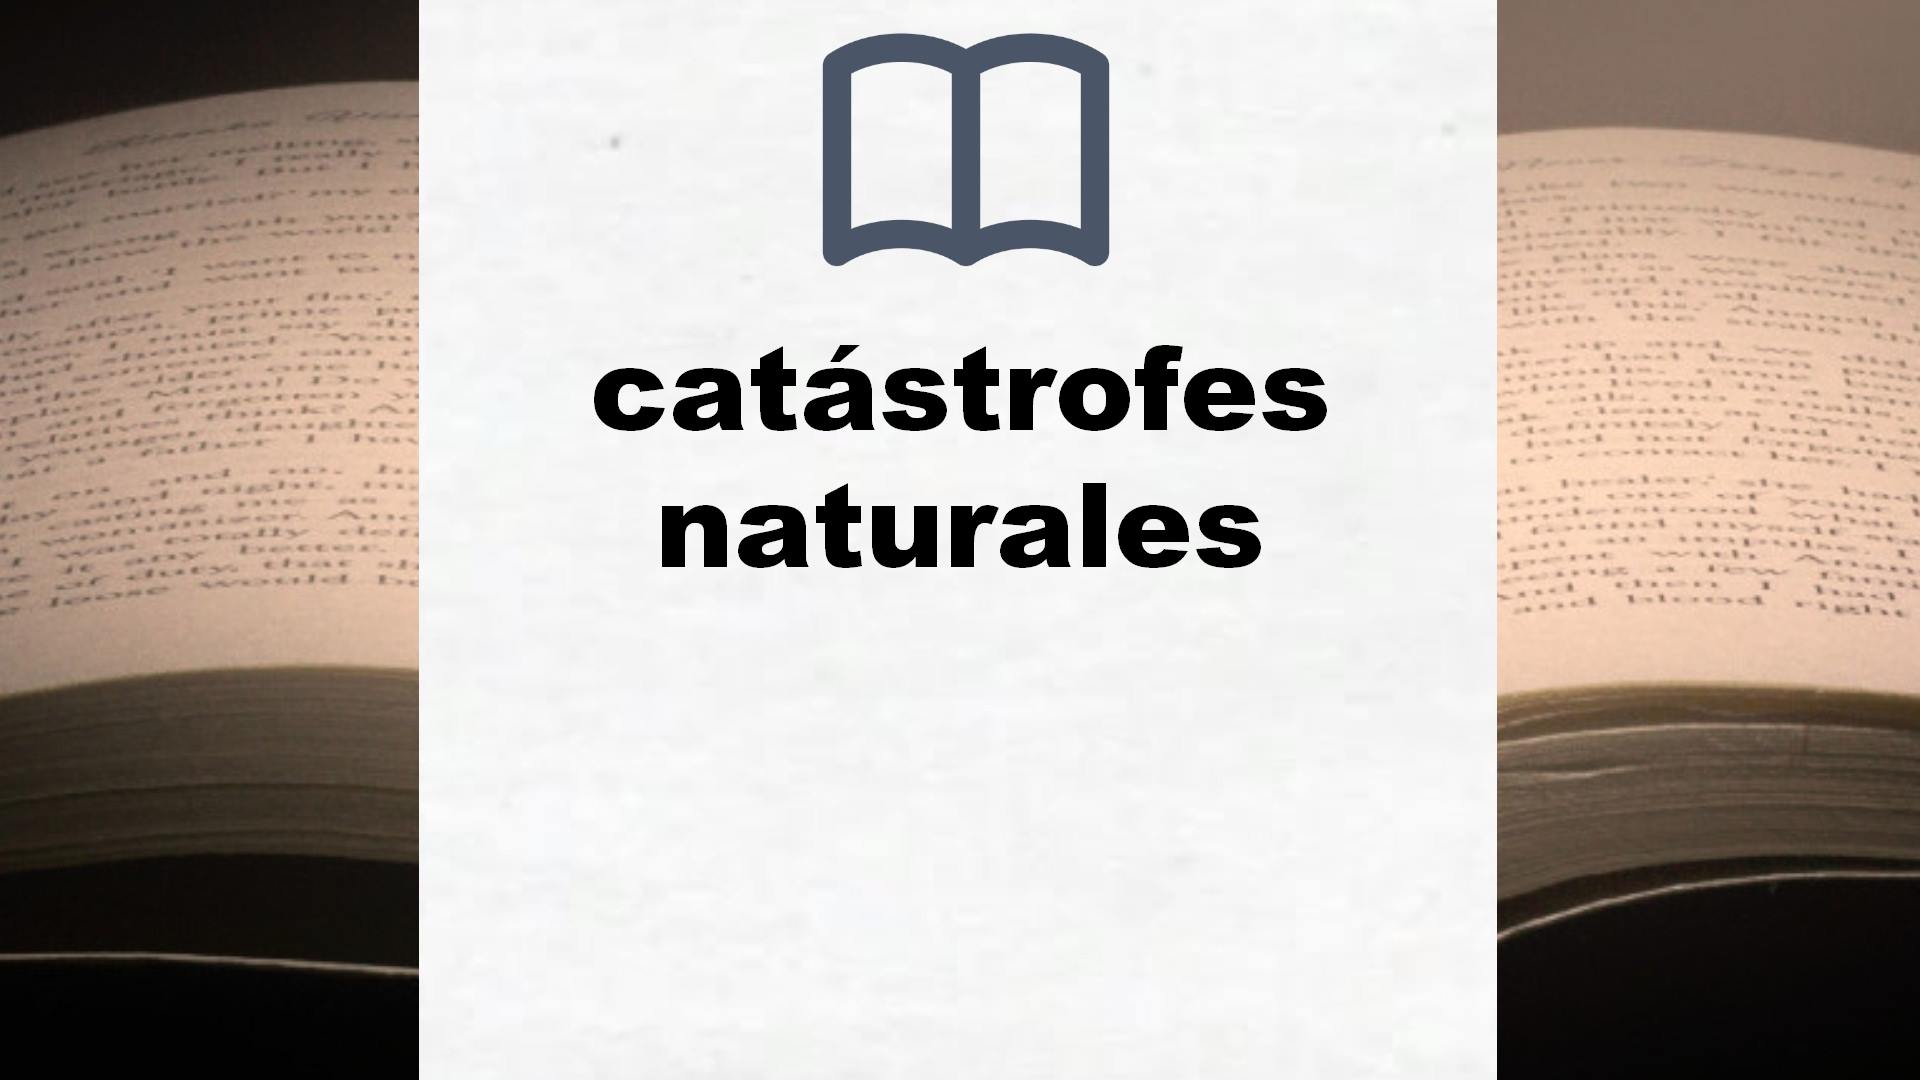 Libros sobre catástrofes naturales